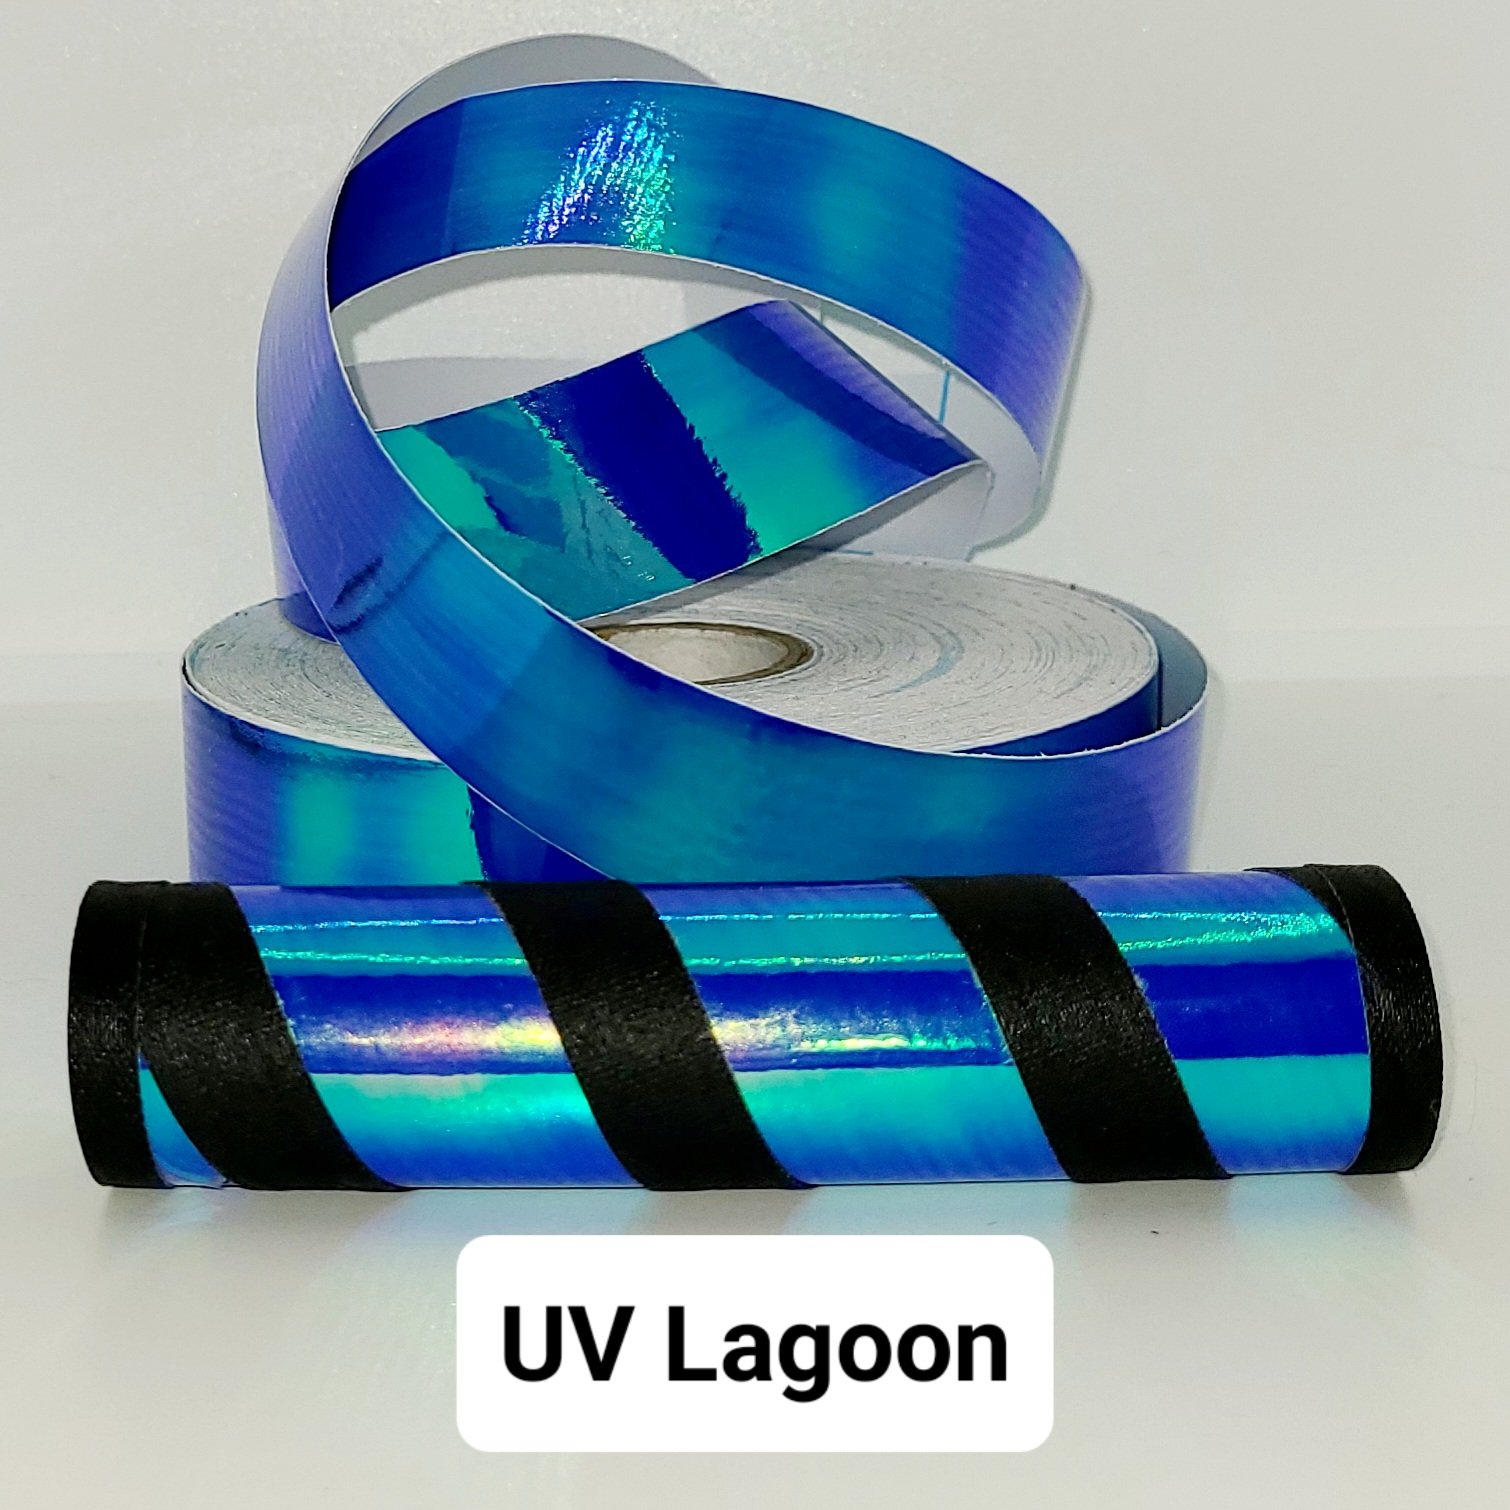 UV Lagoon (body hoop)